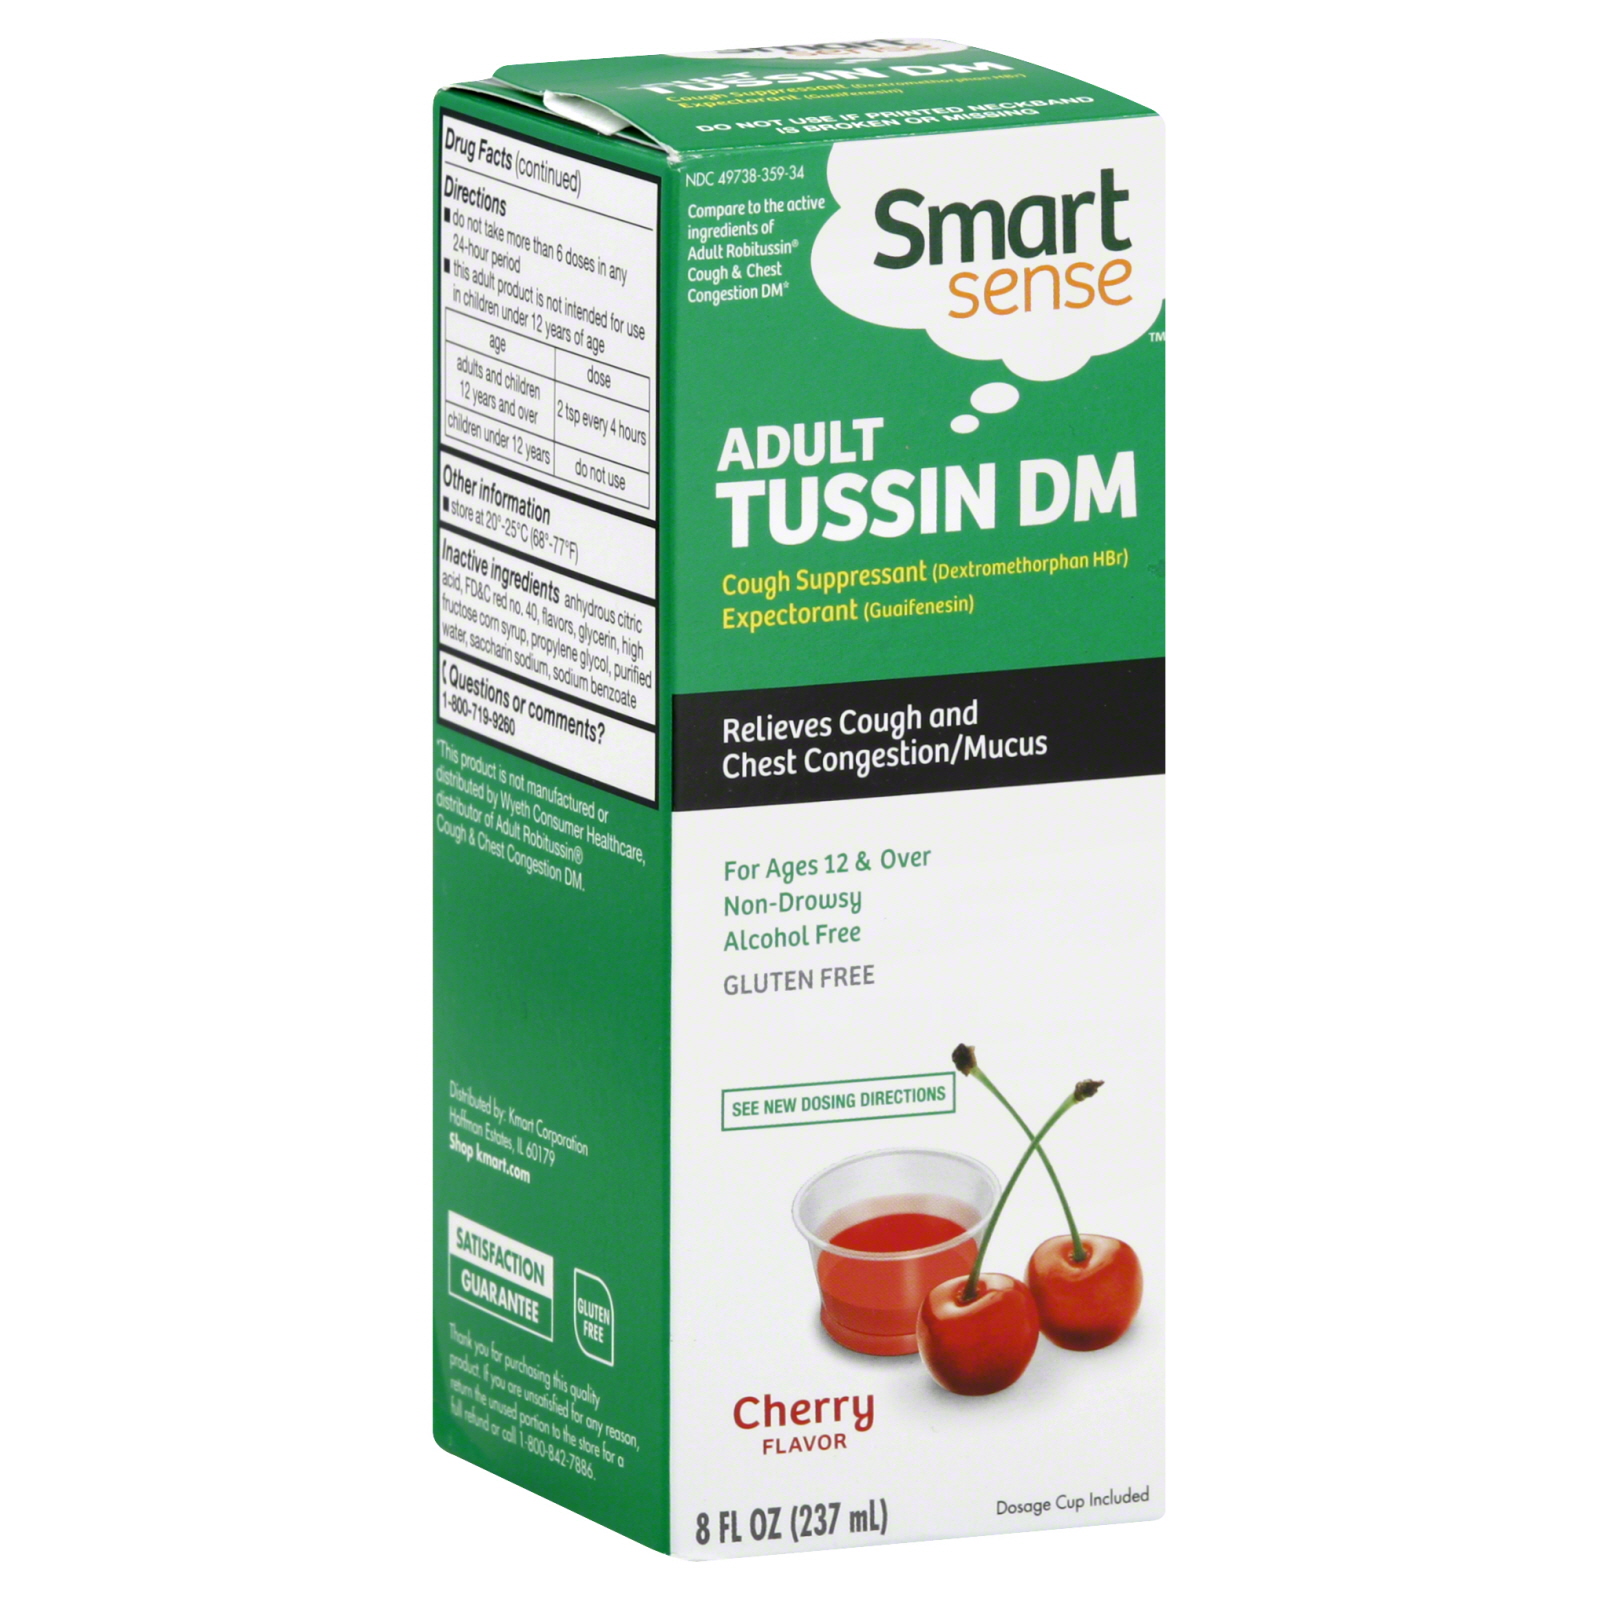 Smart Sense Tussin DM, Adult, Cherry Flavor 8 fl oz (237 ml)